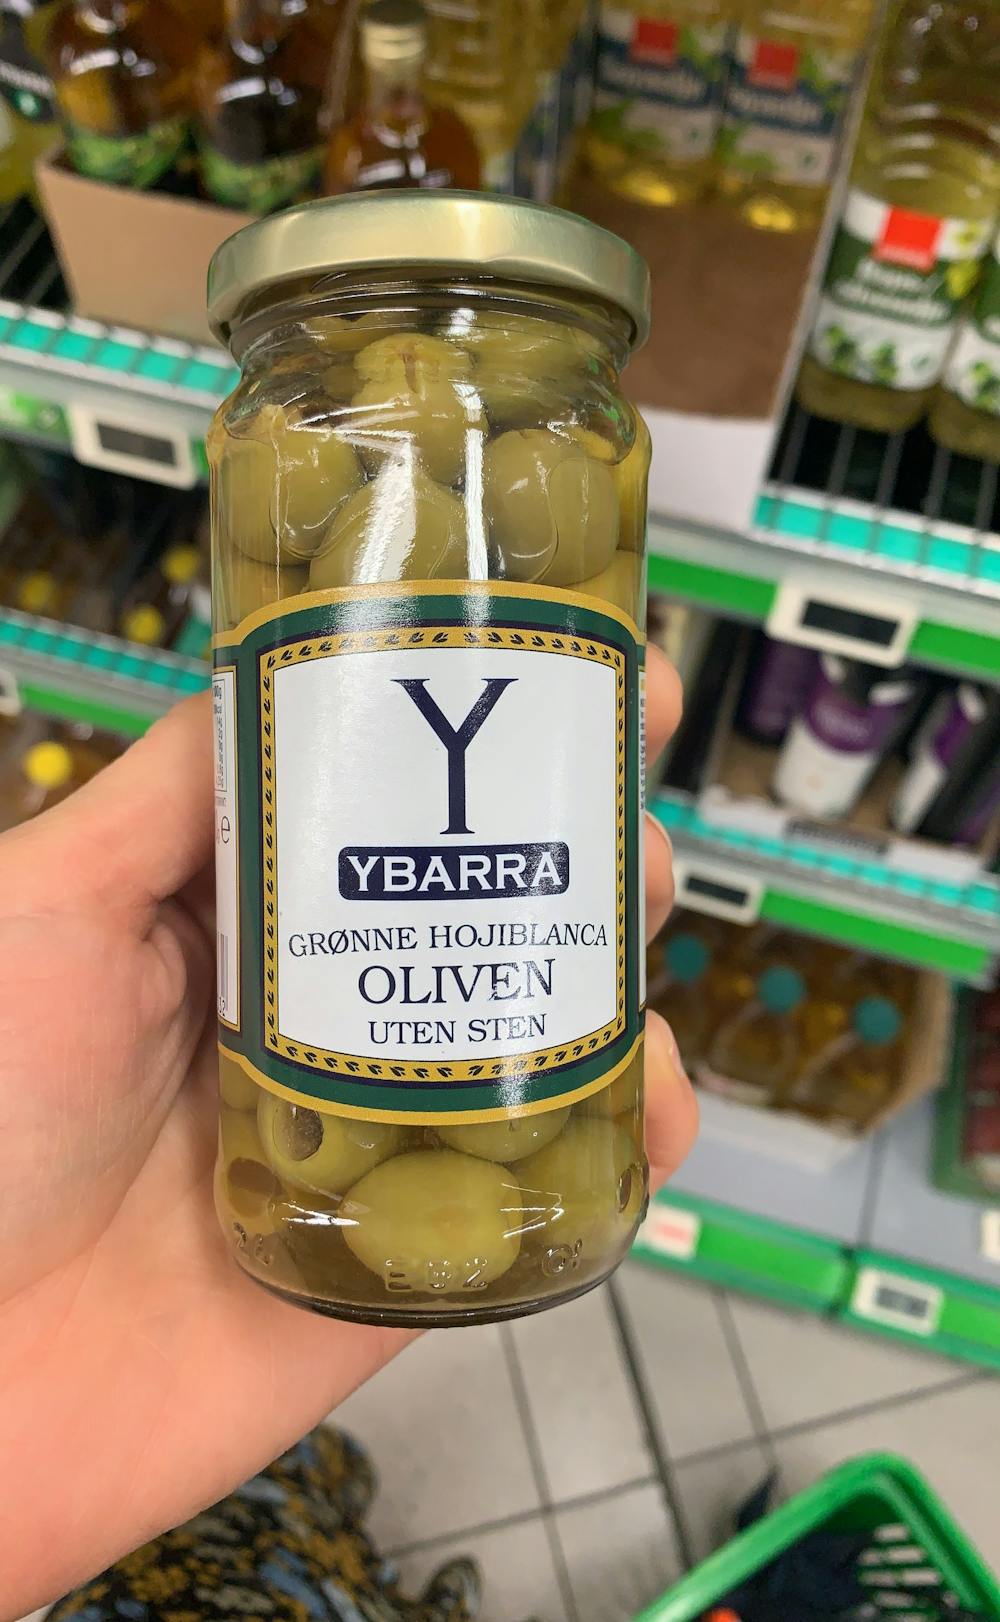 Grønne hojablanca oliven, uten sten, Ybarra